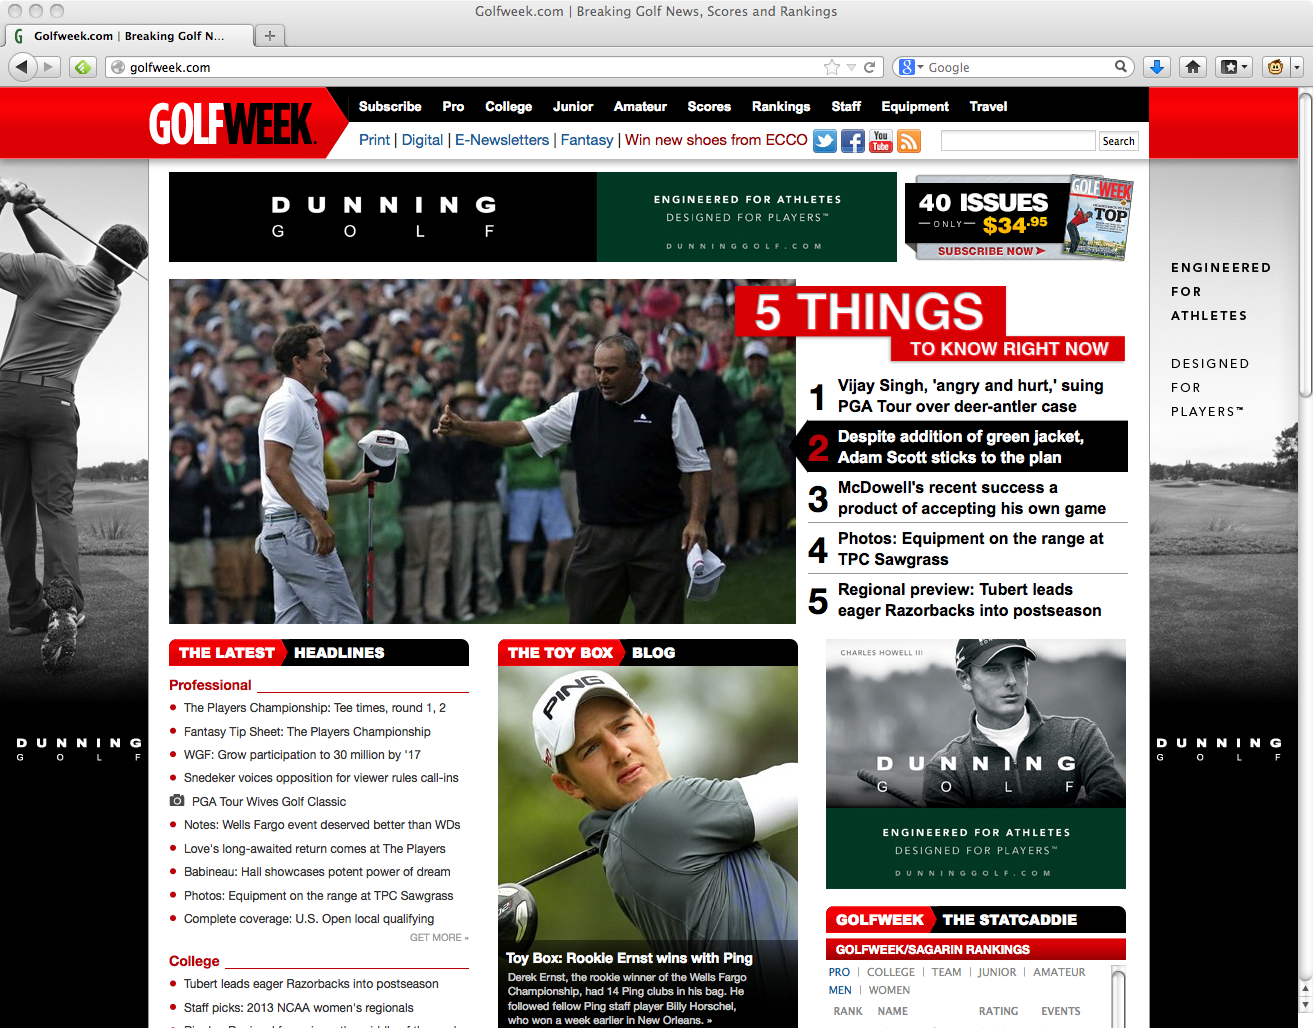 Dunning Golf_Web Ads